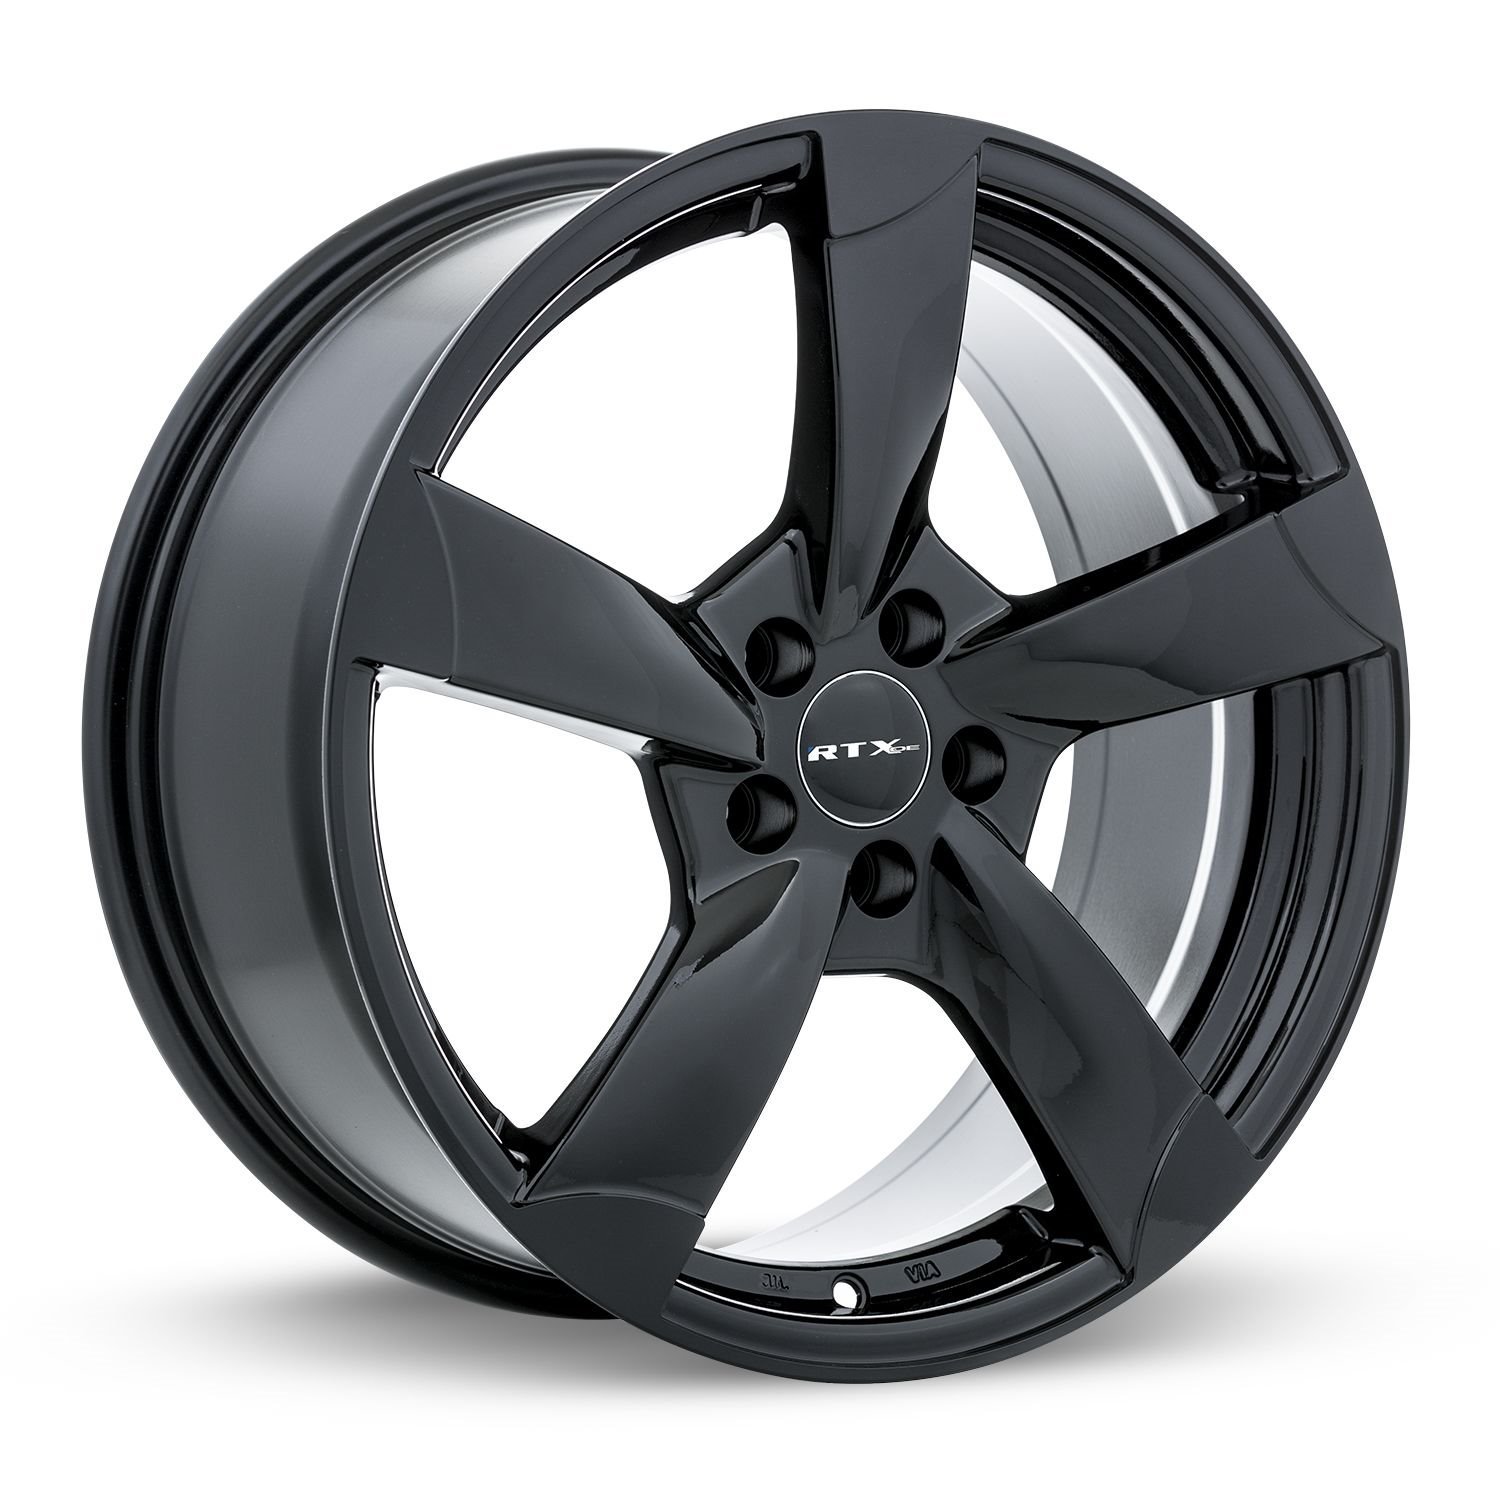 082477 OE-Series RS II Wheel [Size: 19" x 8.50"] Gloss Black Finish